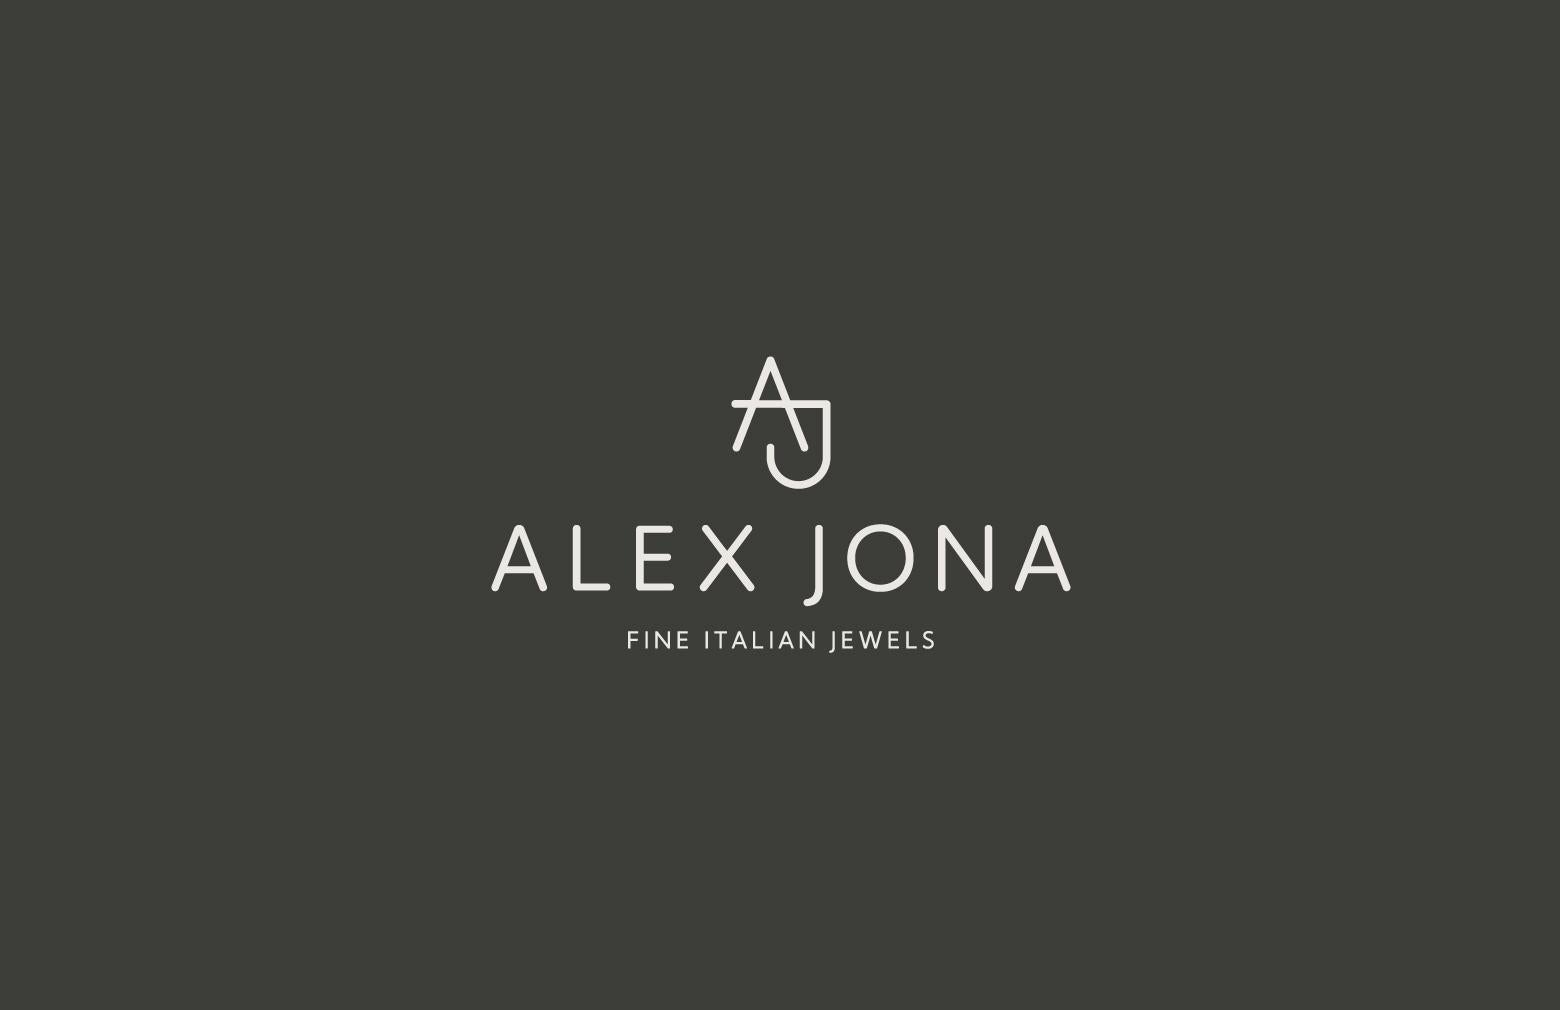 Alex Jona Blue and Black Enamel Sterling Silver Cufflinks For Sale 7